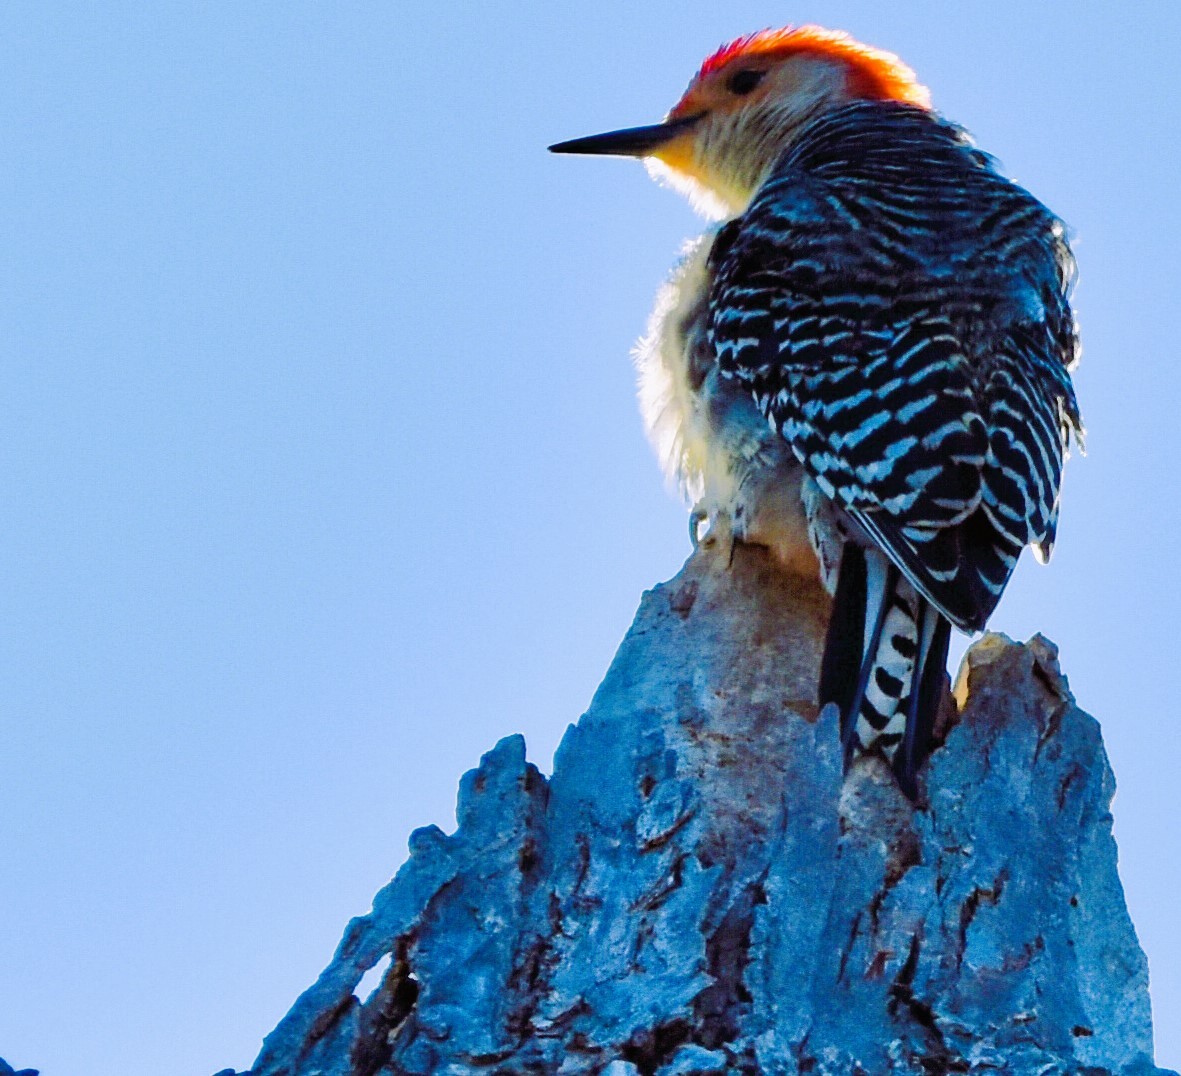 Red-bellied Woodpecker - Jason C. Martin